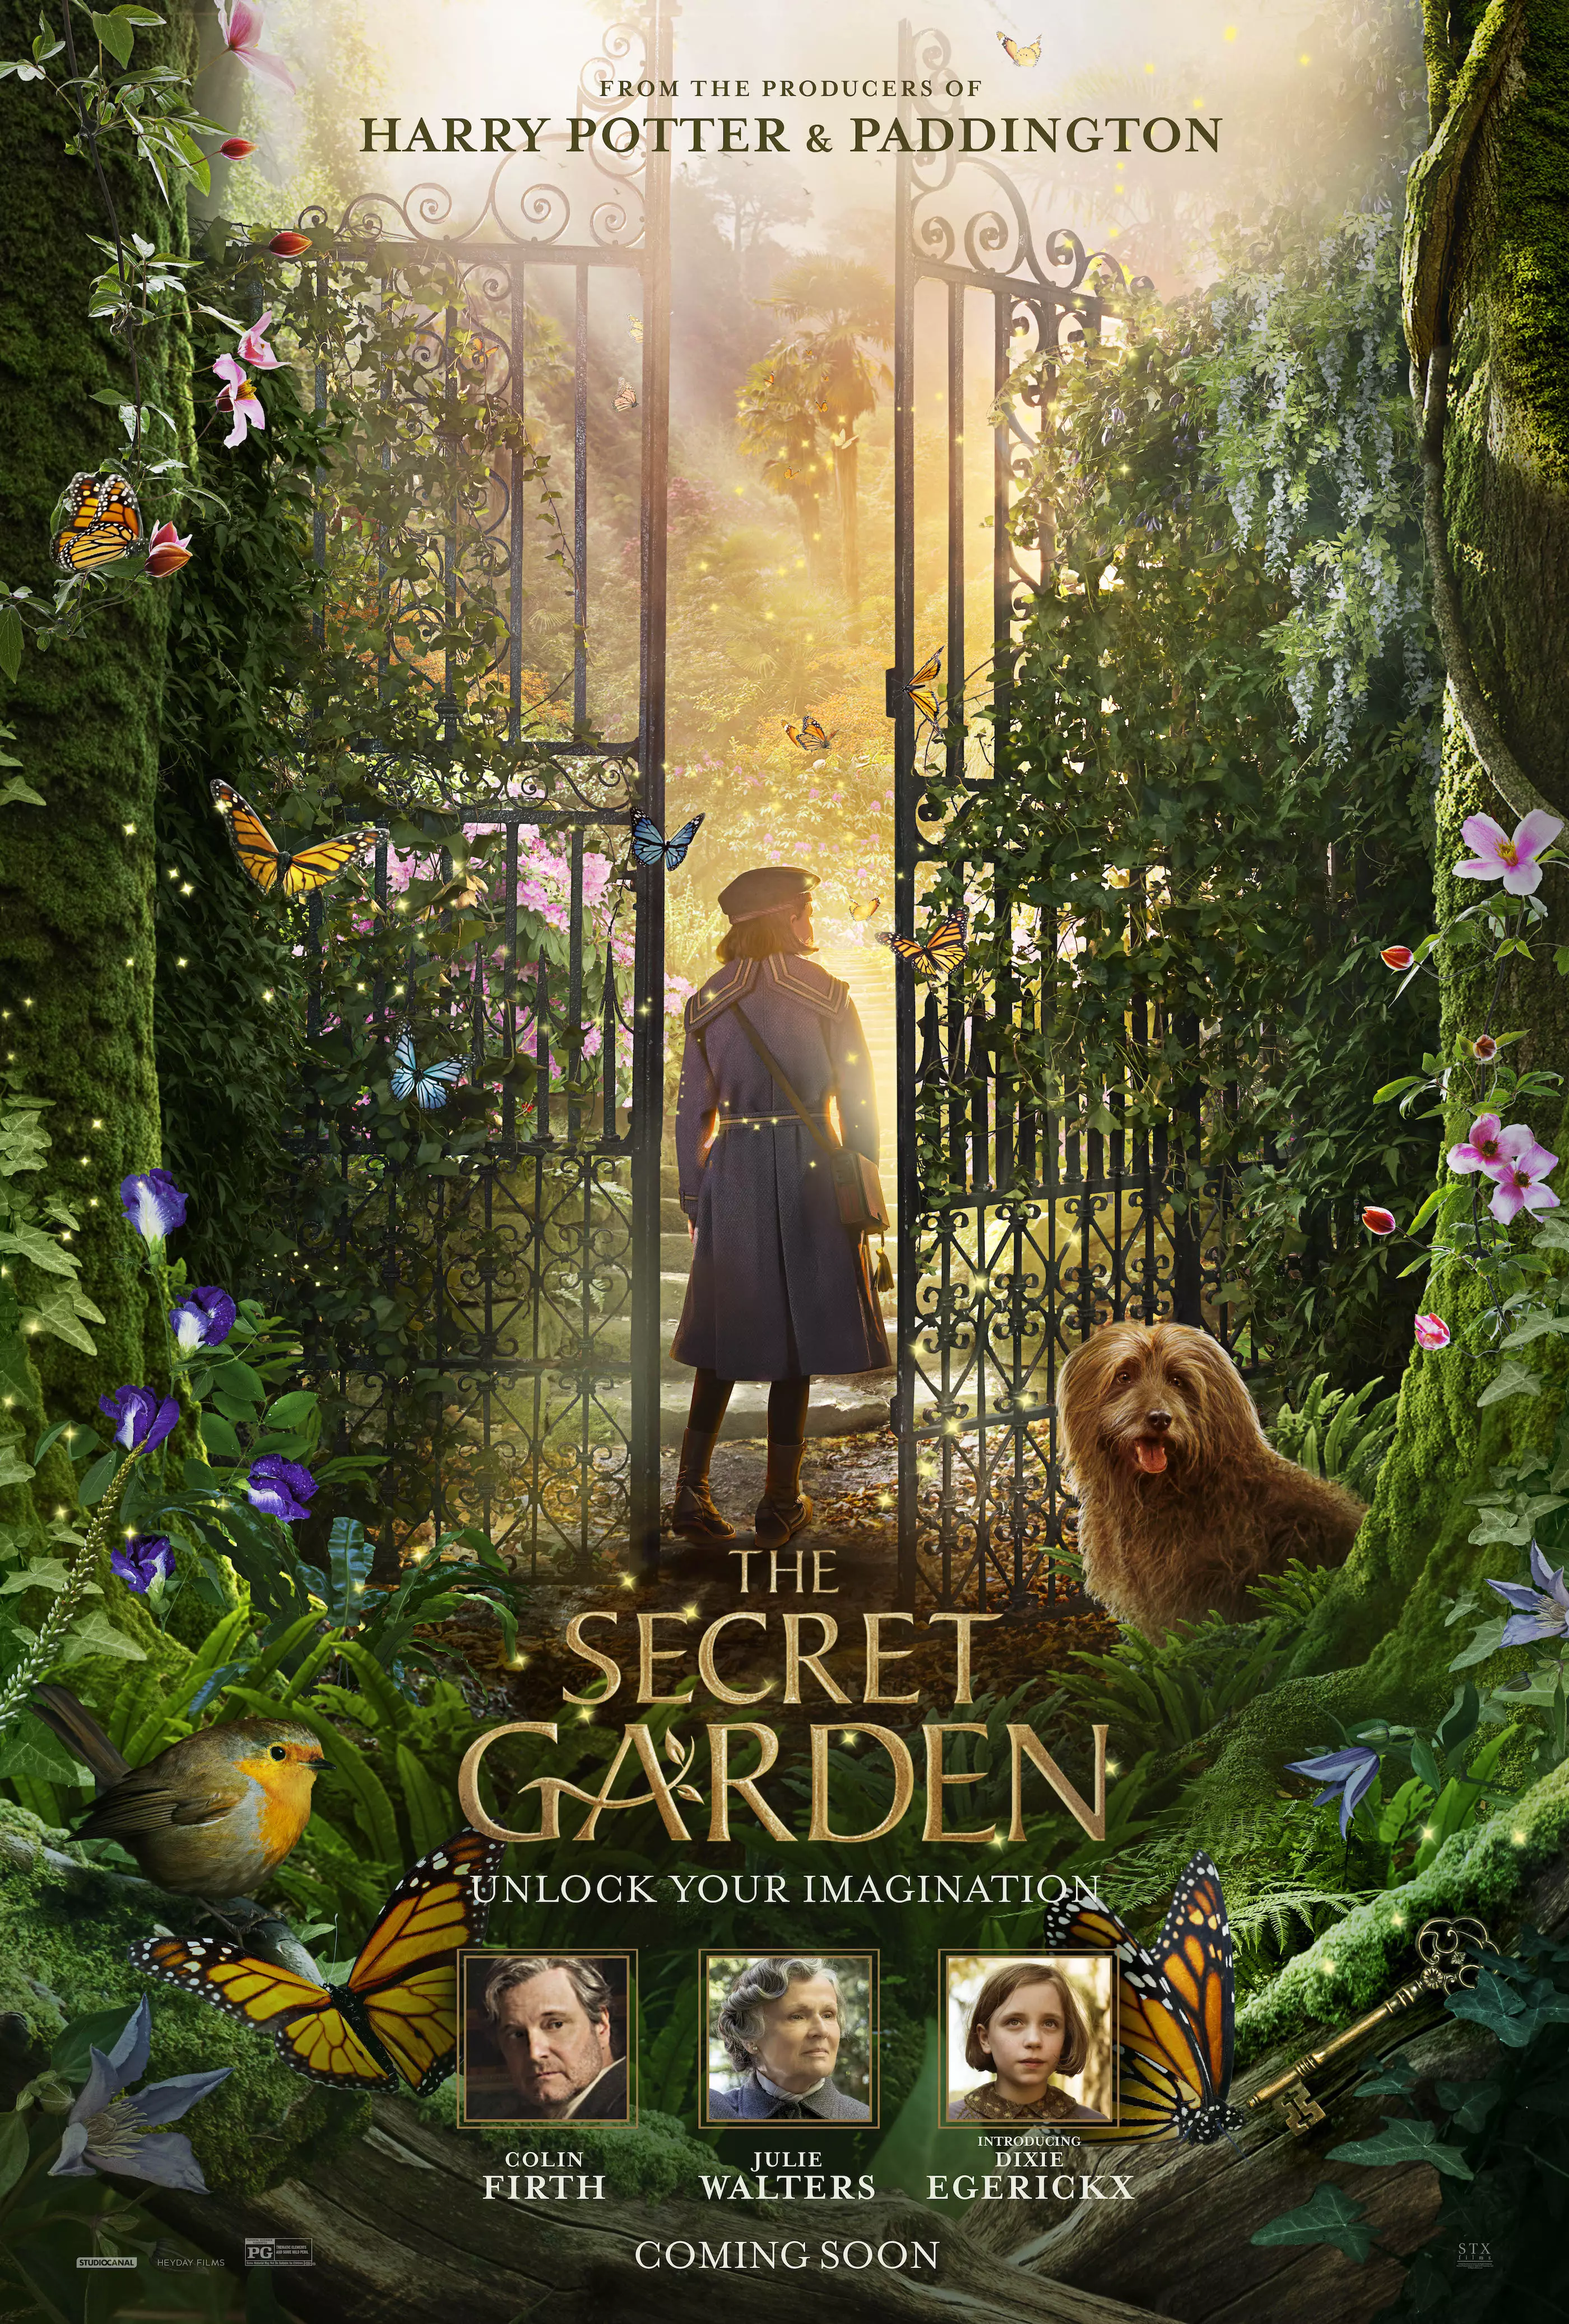 The Secret Garden will hit screens on October 23rd (